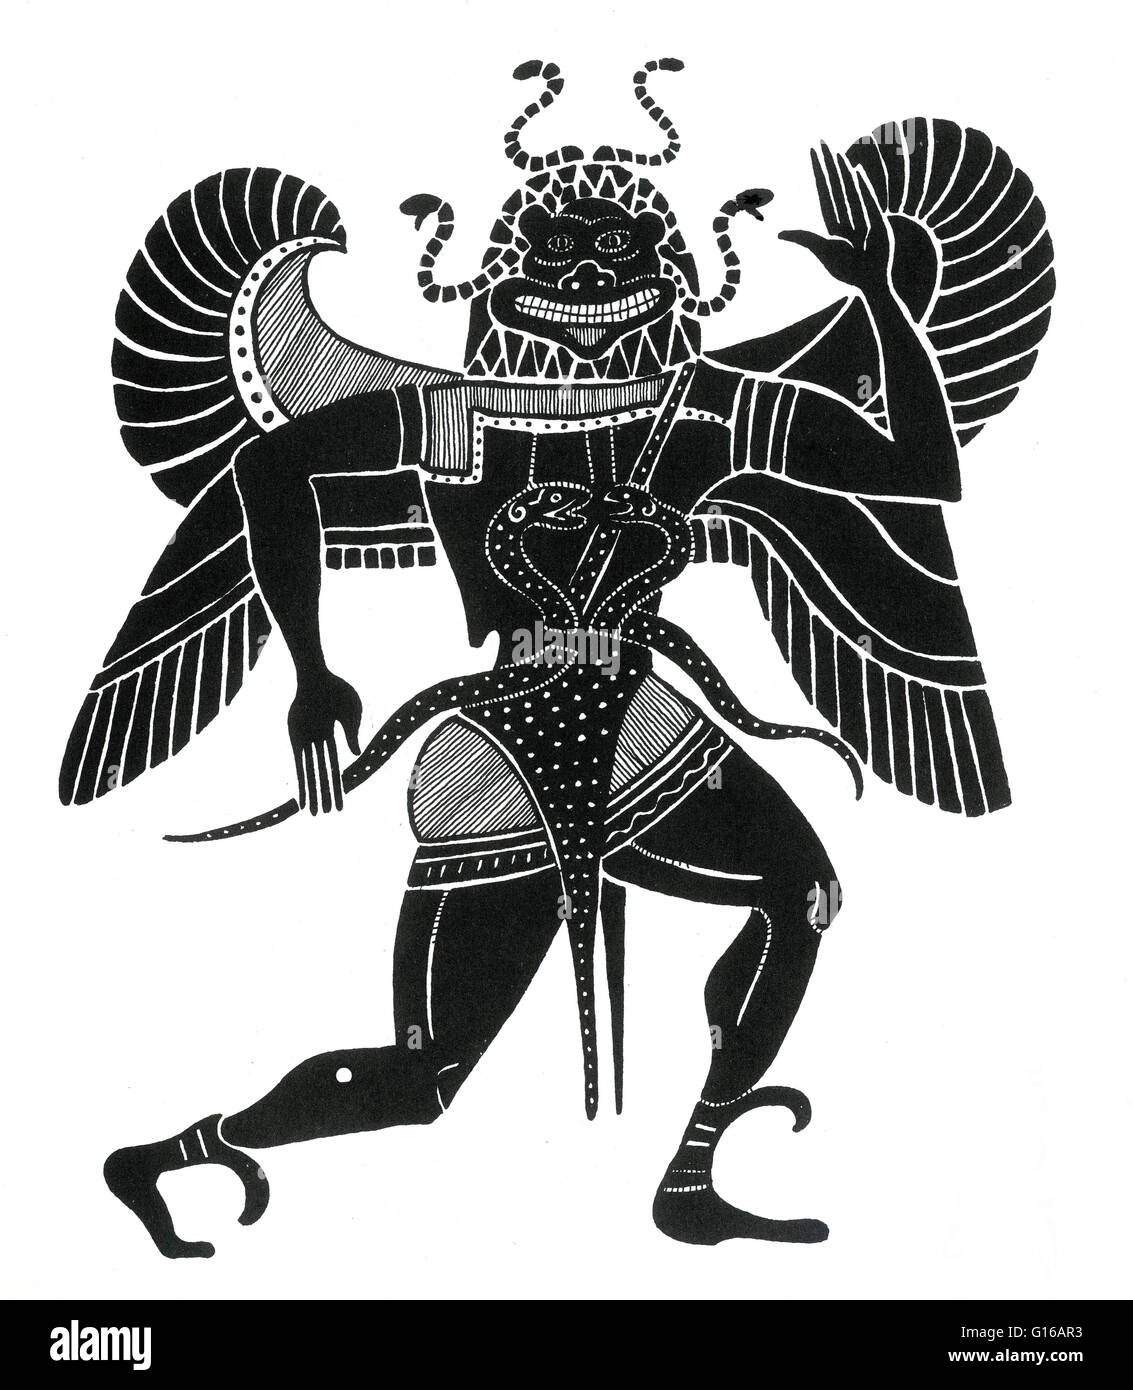 Medusa Gorgon Goddess Sticker